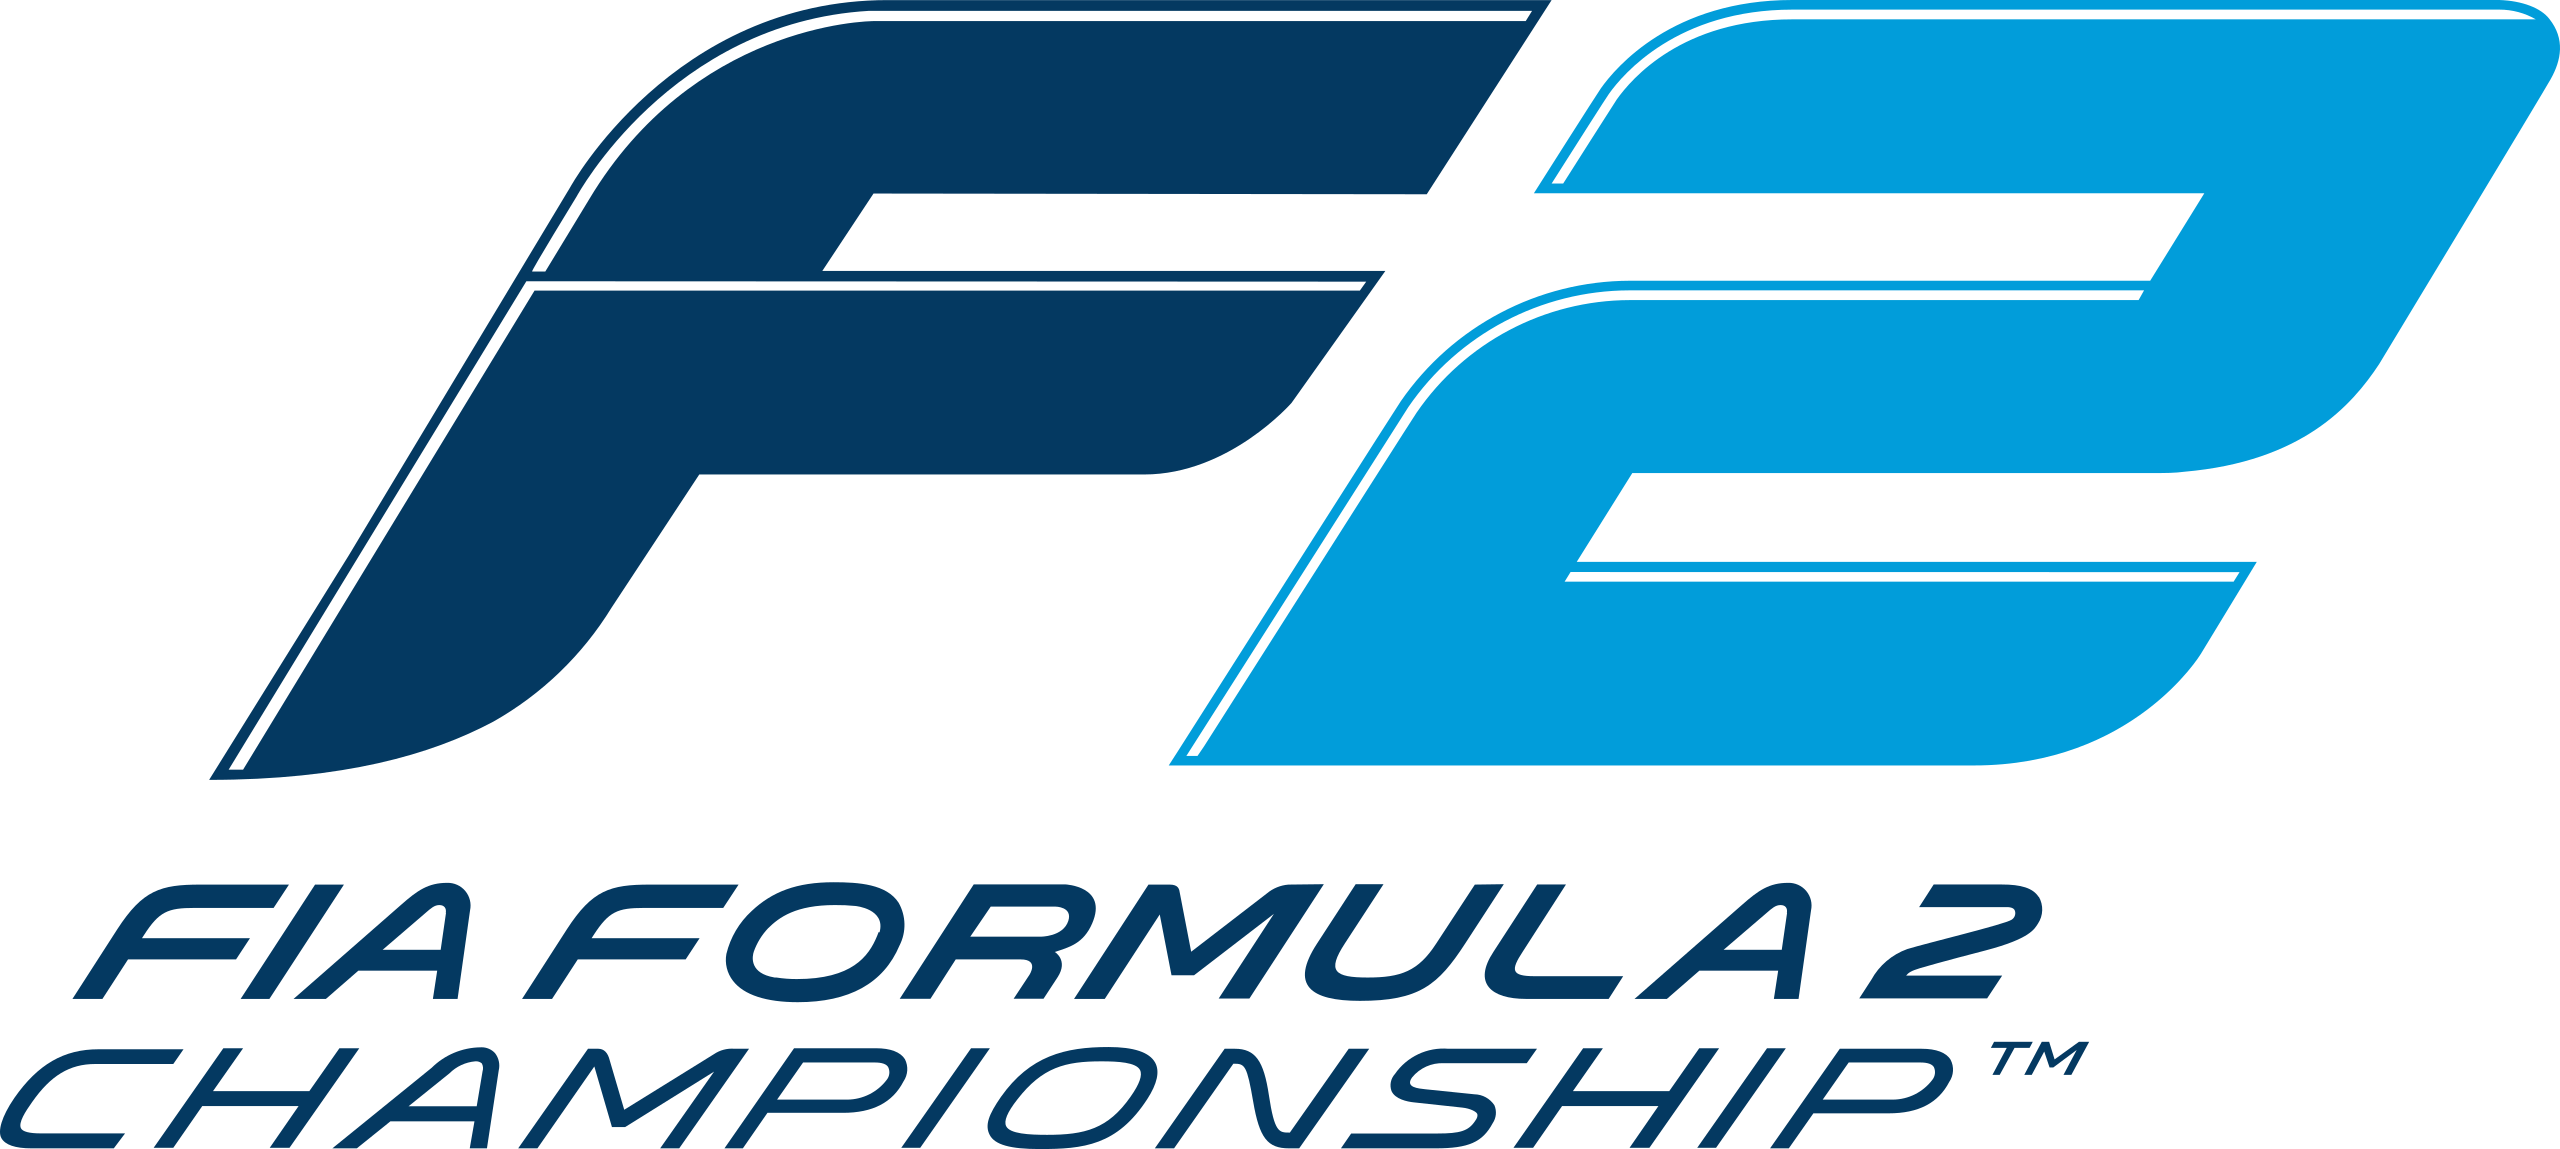 Formule2 2022 GP11 Belgie Kwalificatie DUTCH 720p WEB-DL AAC2 0 x264-UGDV